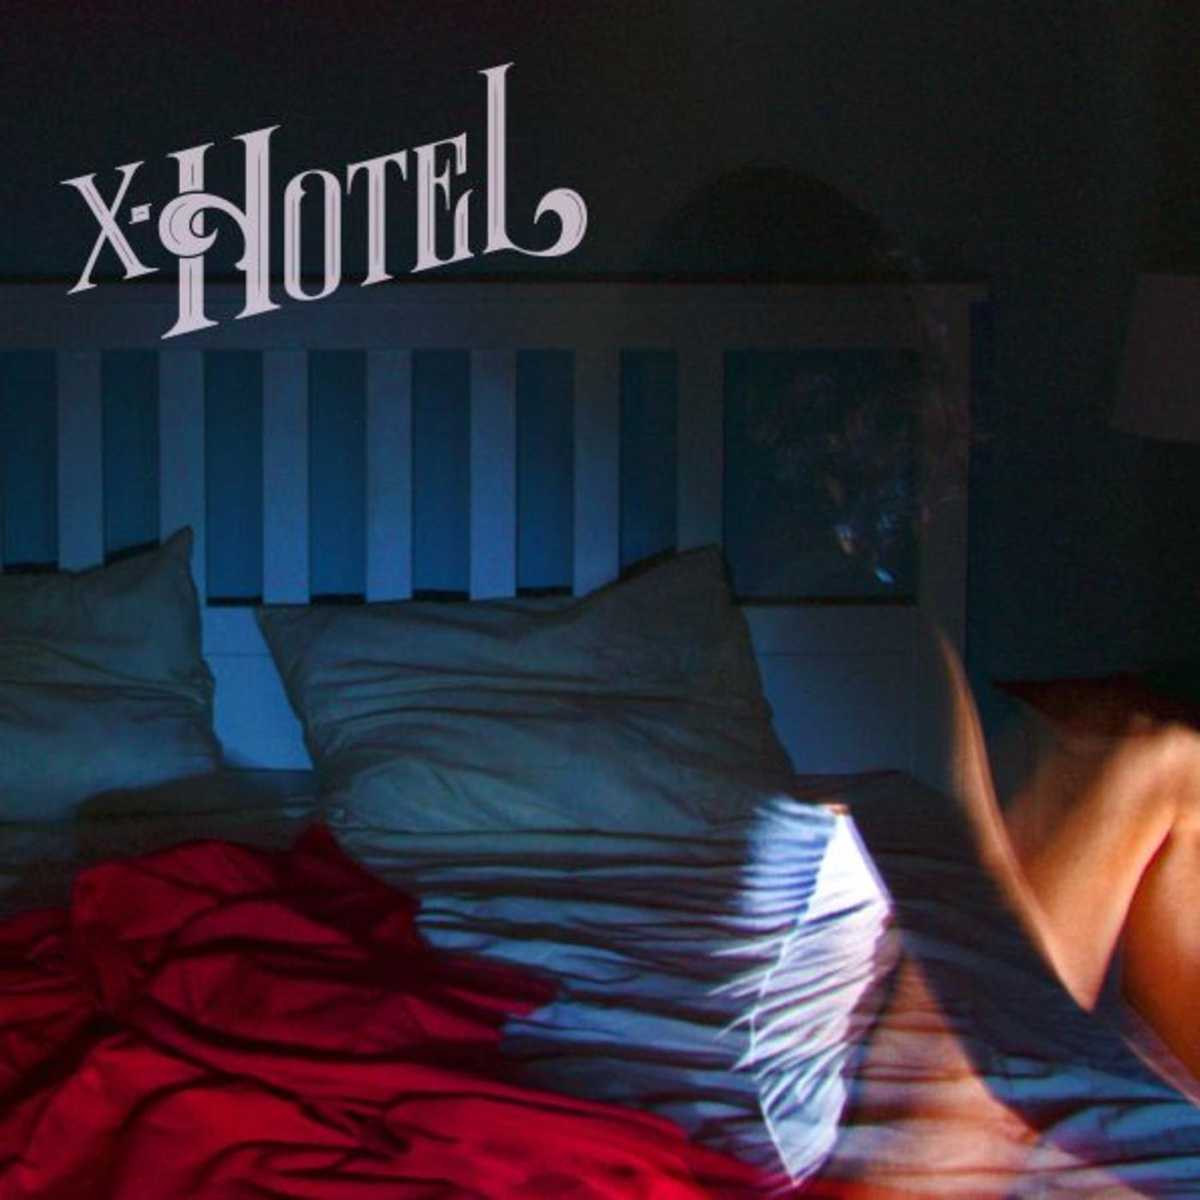 X-Hotel Orestis Ntantos